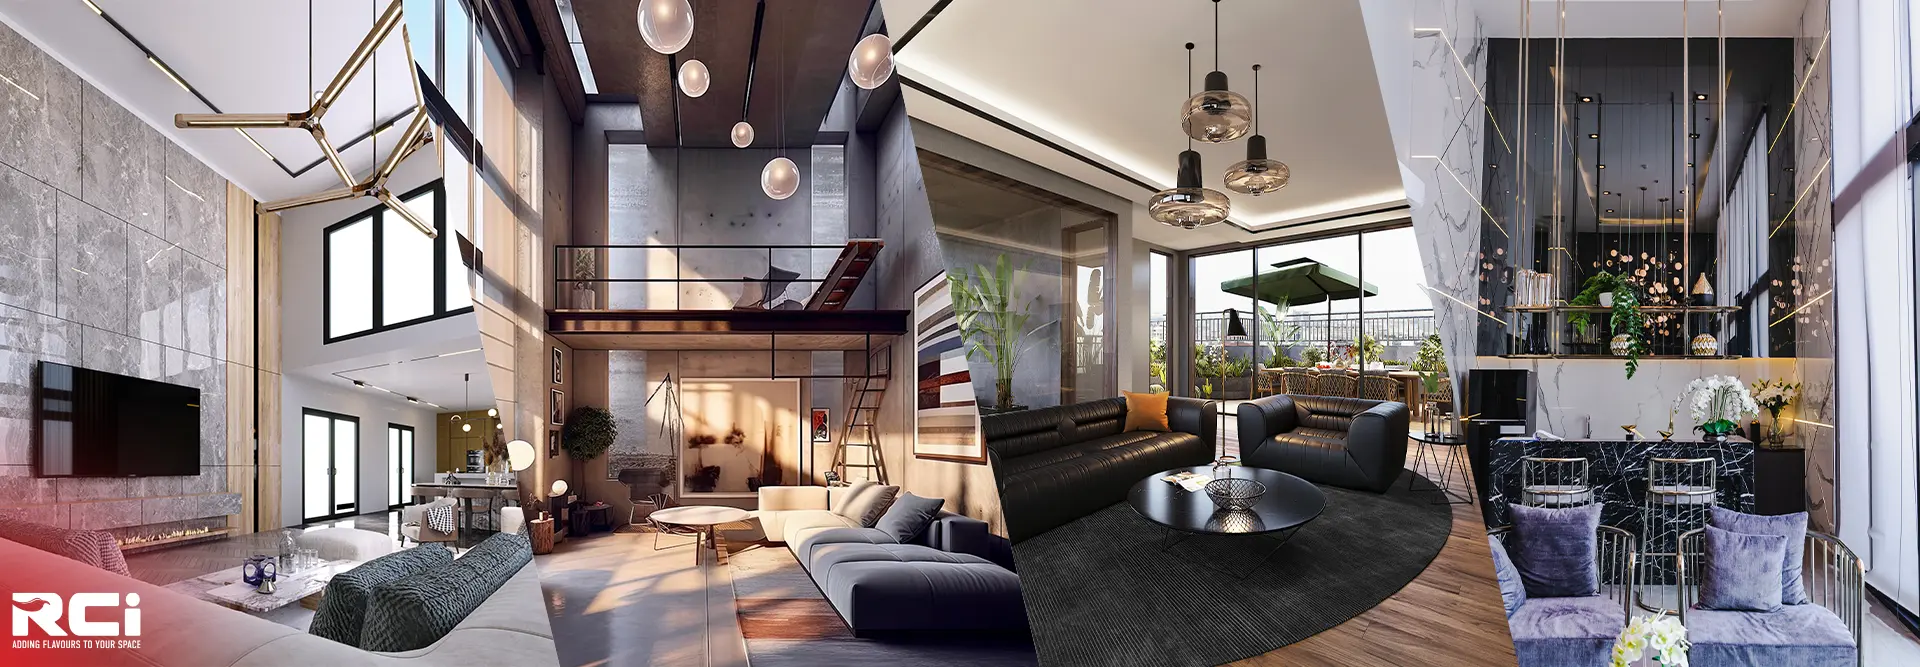 Elegant penthouse interior design showcasing luxurious living spaces by RCi Red Chillies Interiors LLC in Dubai.